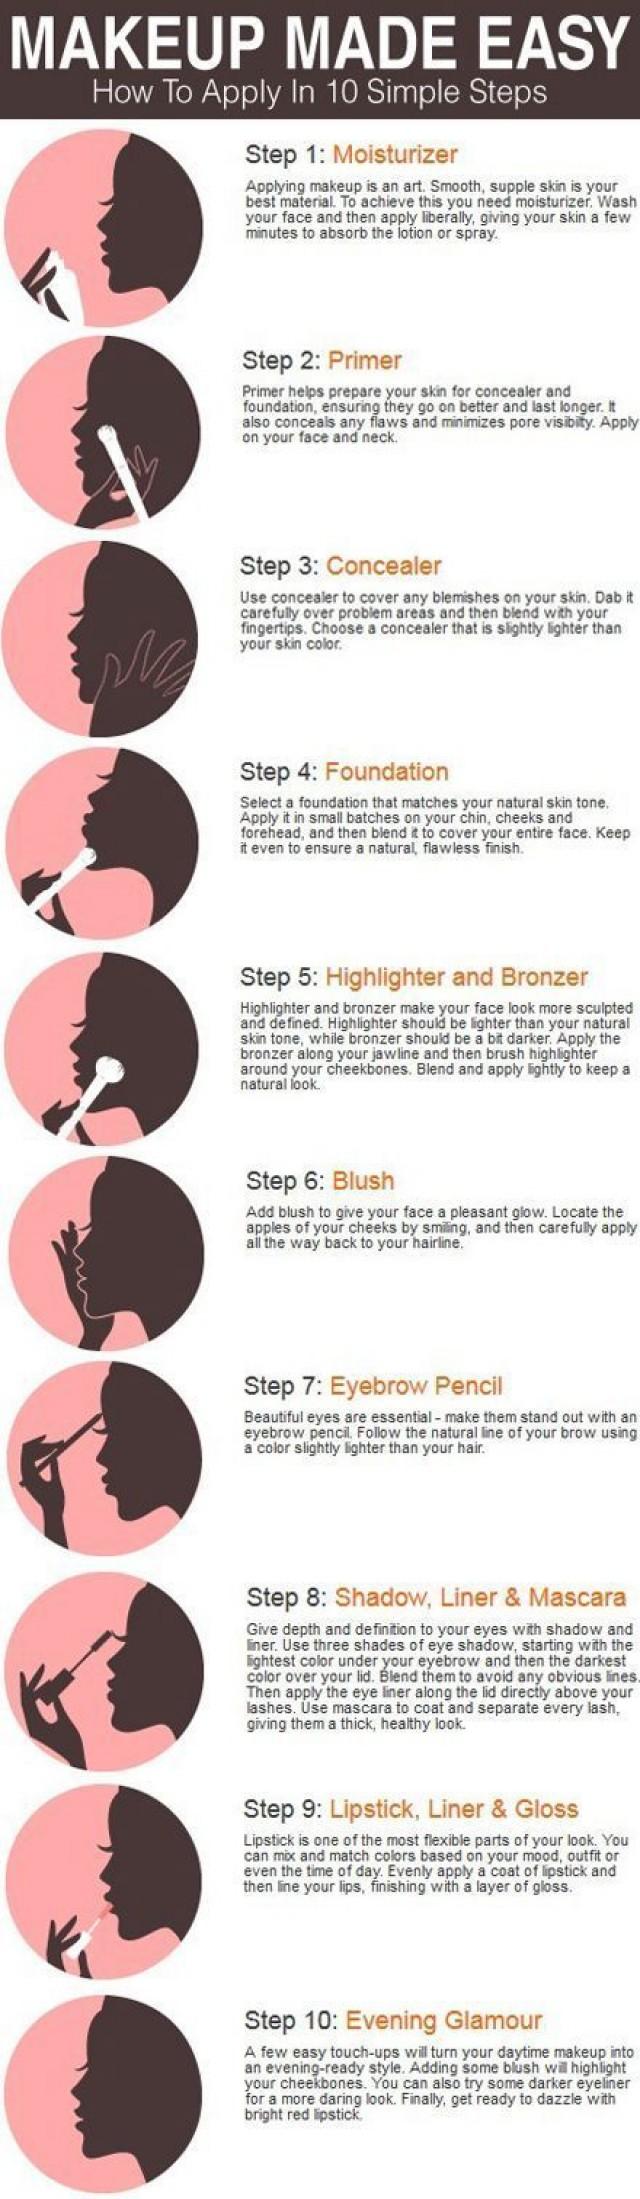 Top 10 Eye Make-up Tricks